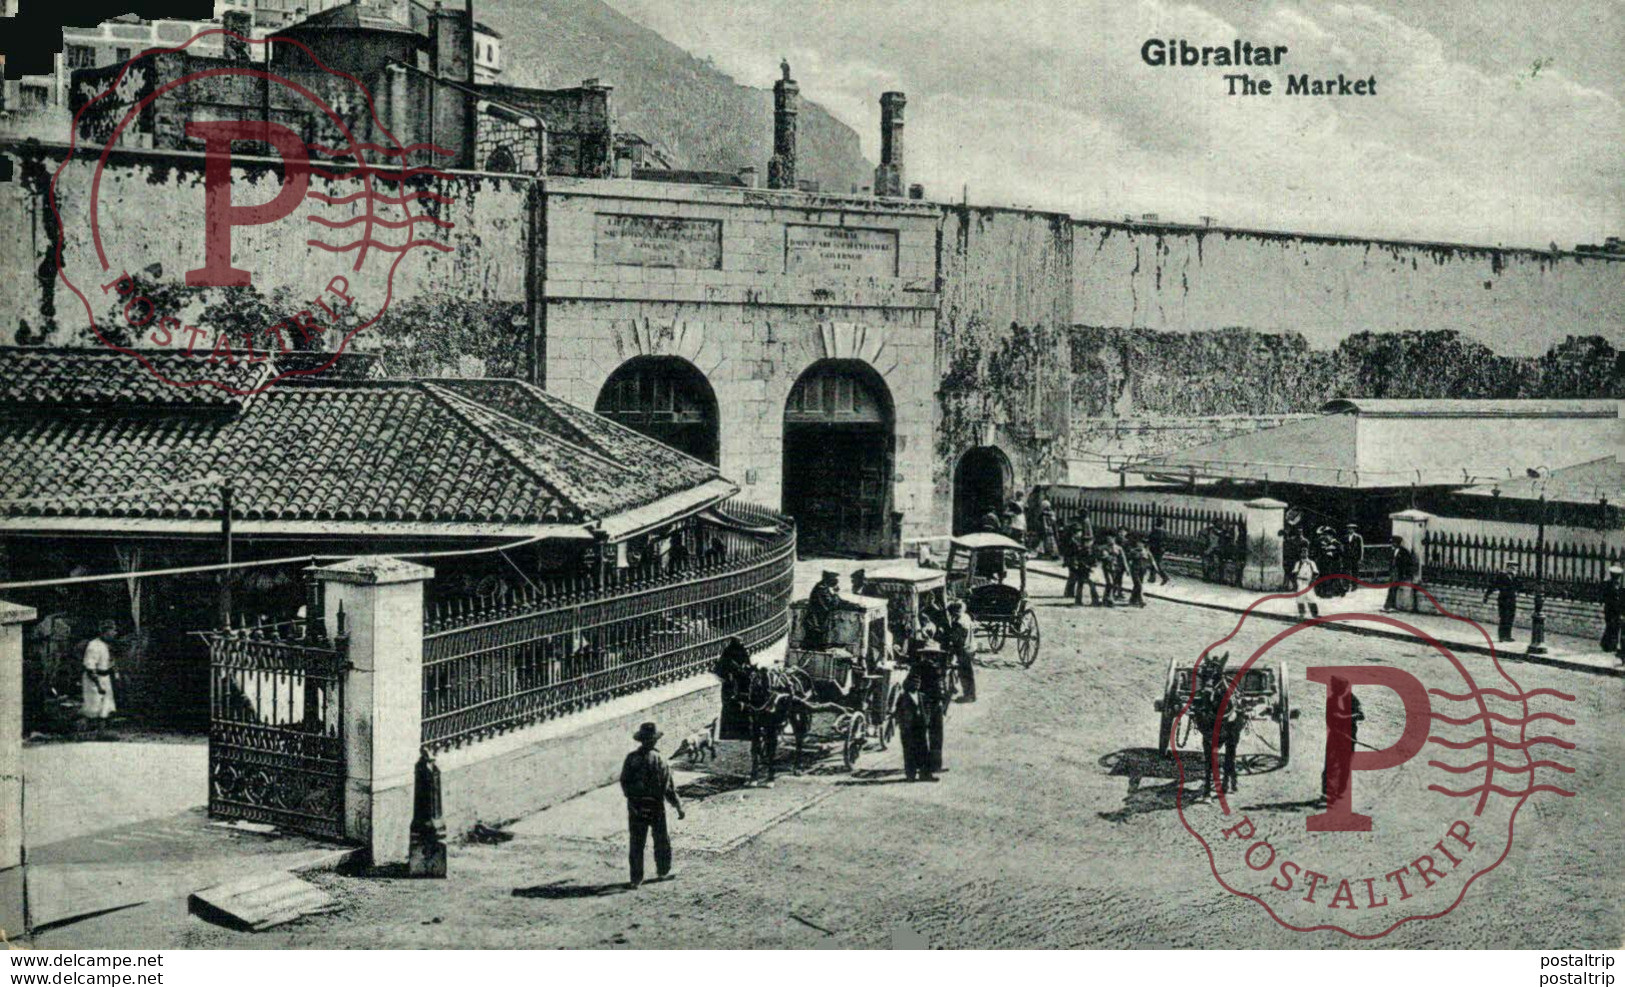 The Market.  // GIBRALTAR - Gibraltar